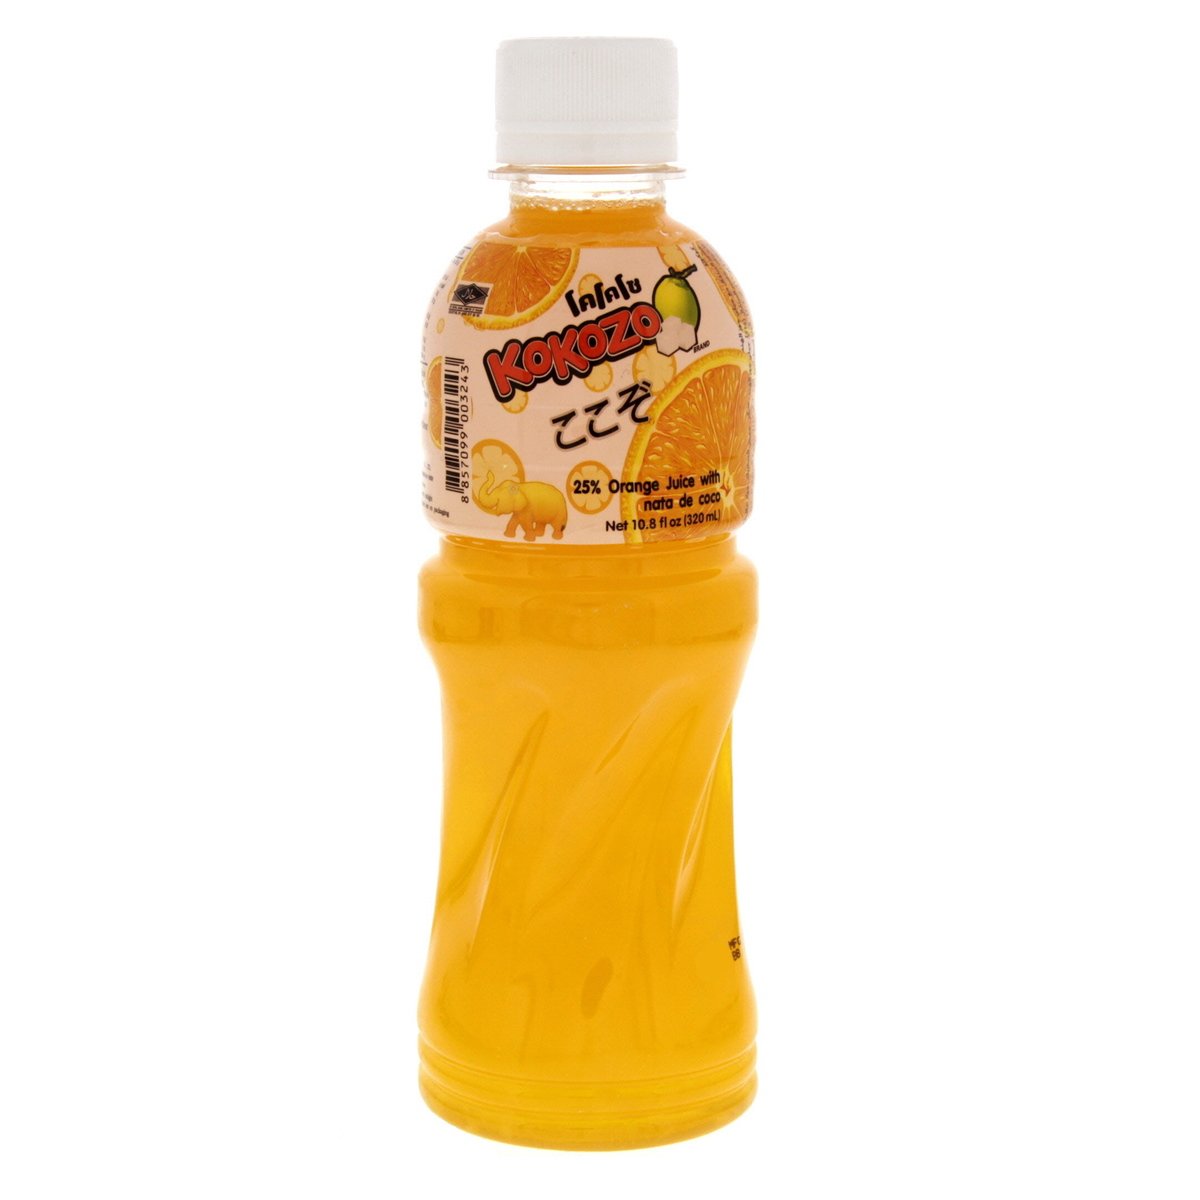 Kokozo Orange Juice With Nata De Coco 320ml